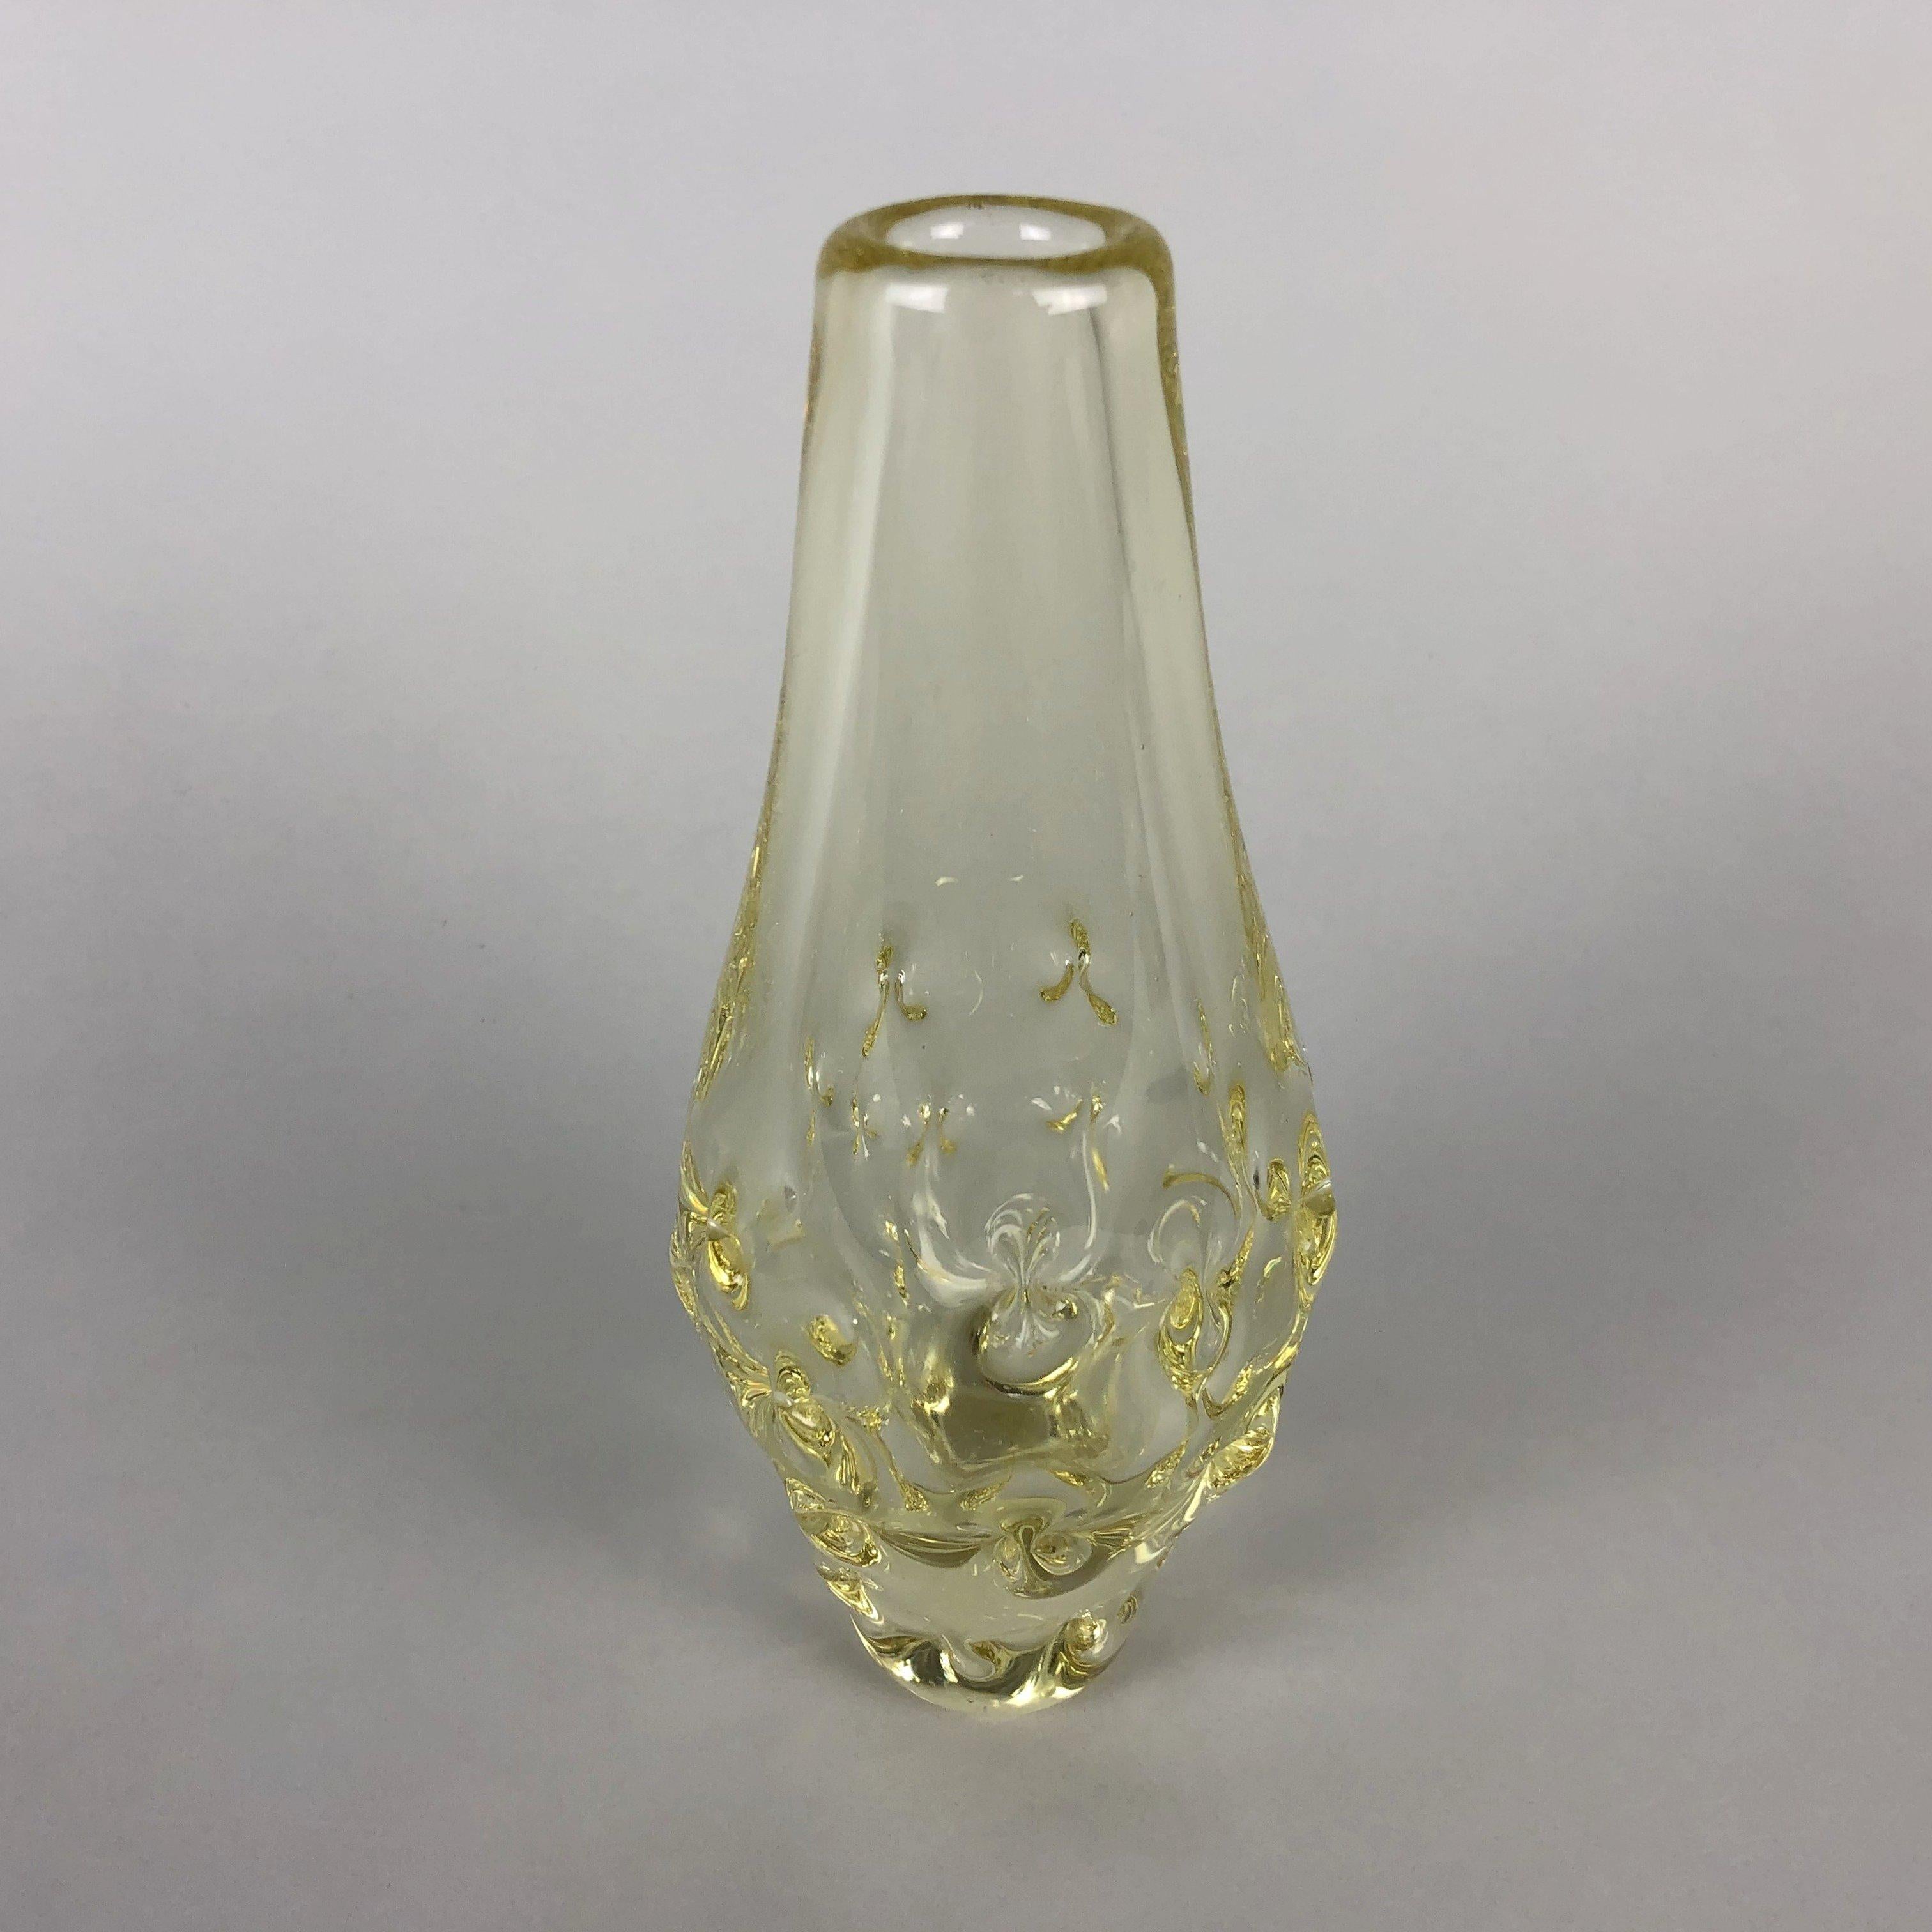 Vase aus gelbem/zitrinfarbenem Glas, mit 